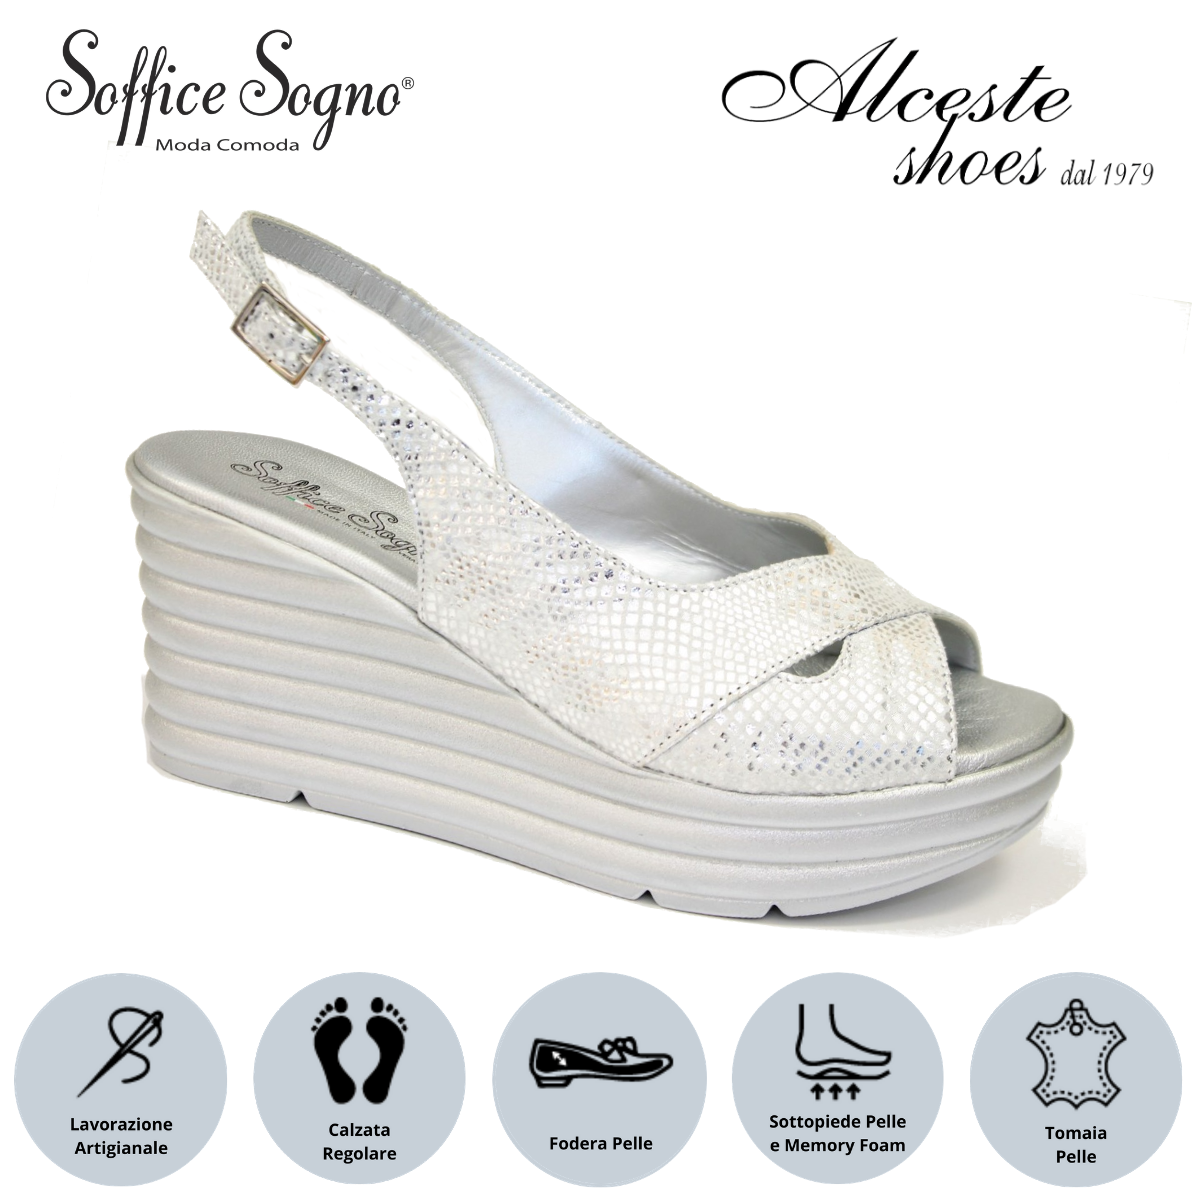 Sandalo con Zeppa "Soffice Sogno" Art. 1010 Pelle Stampata Argento Alceste Shoes 8 2